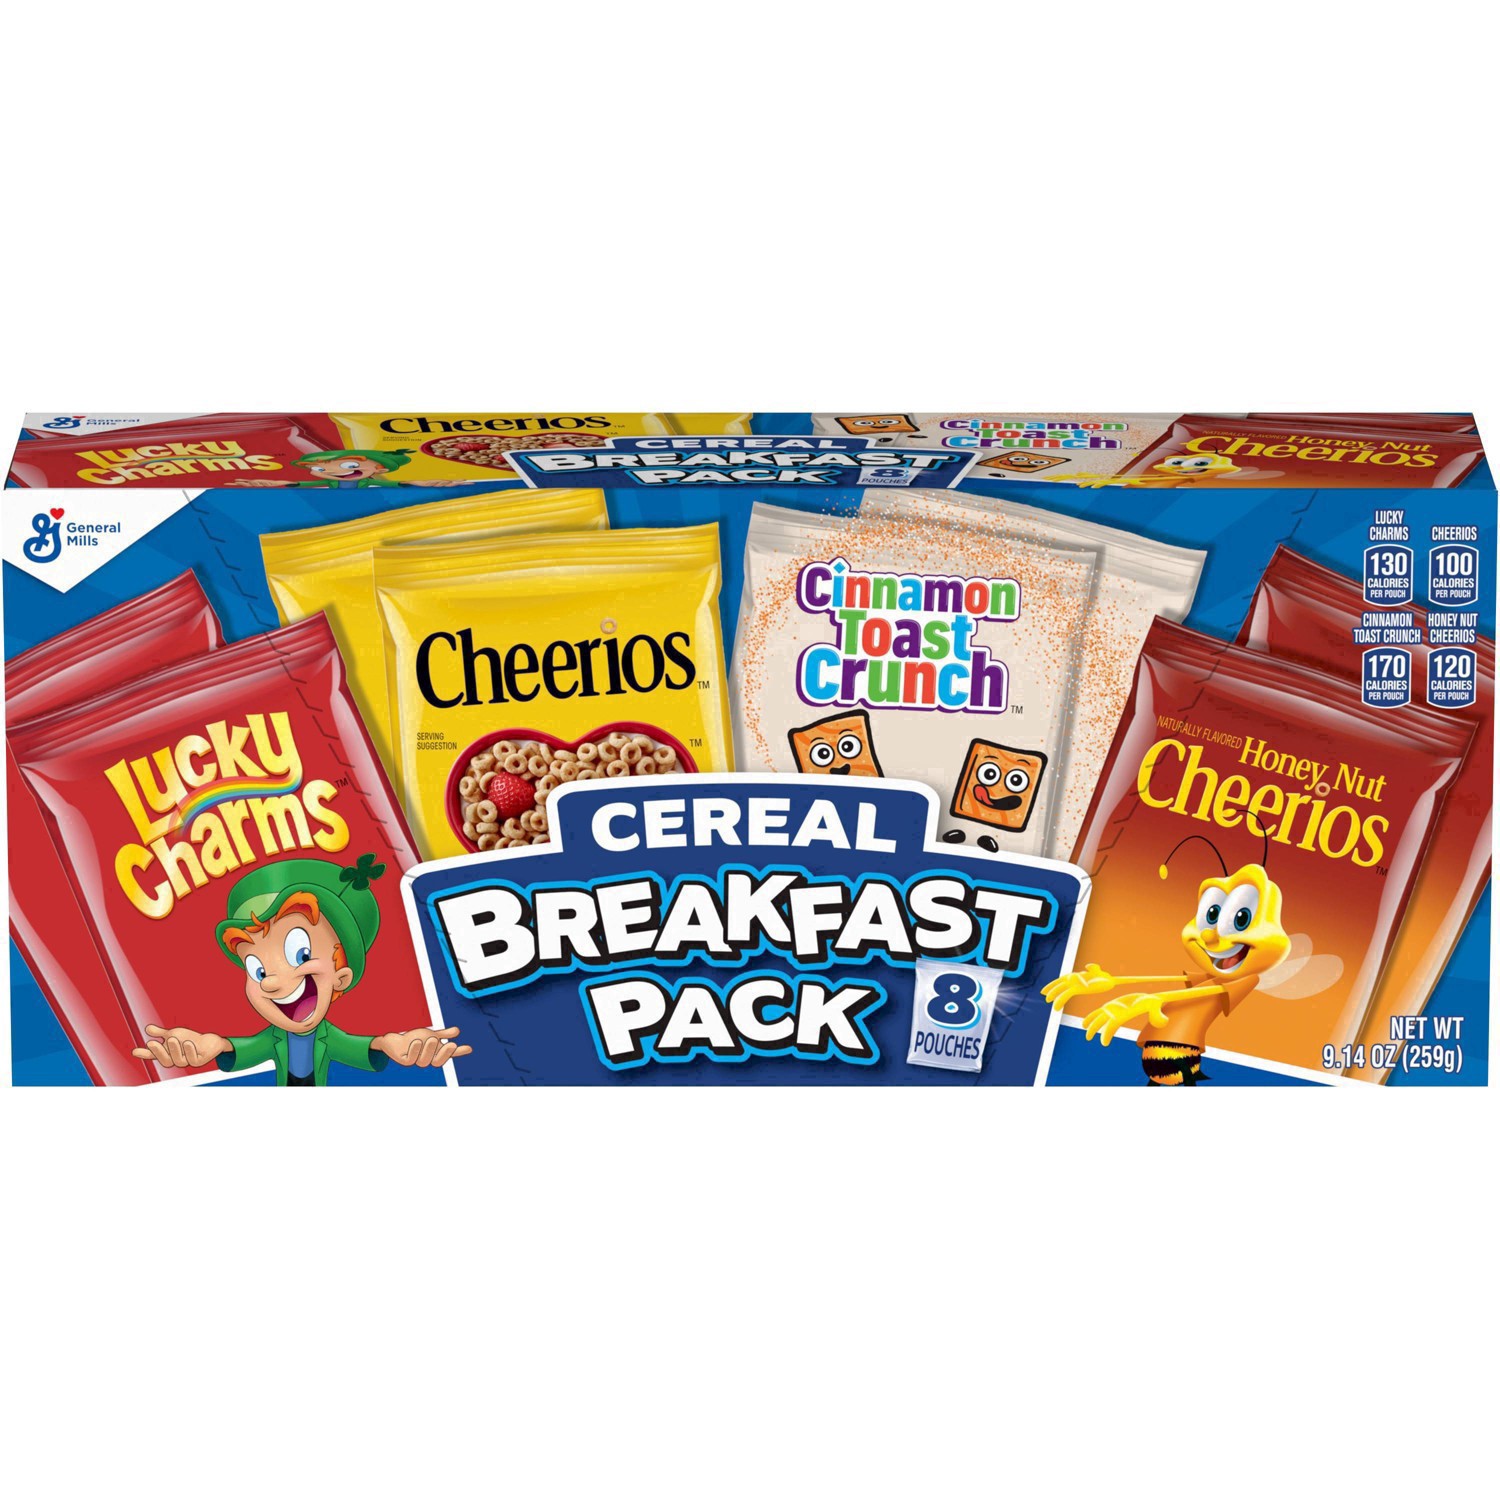 slide 75 of 141, General Mills Breakfast Pack Cereal, 8 ct